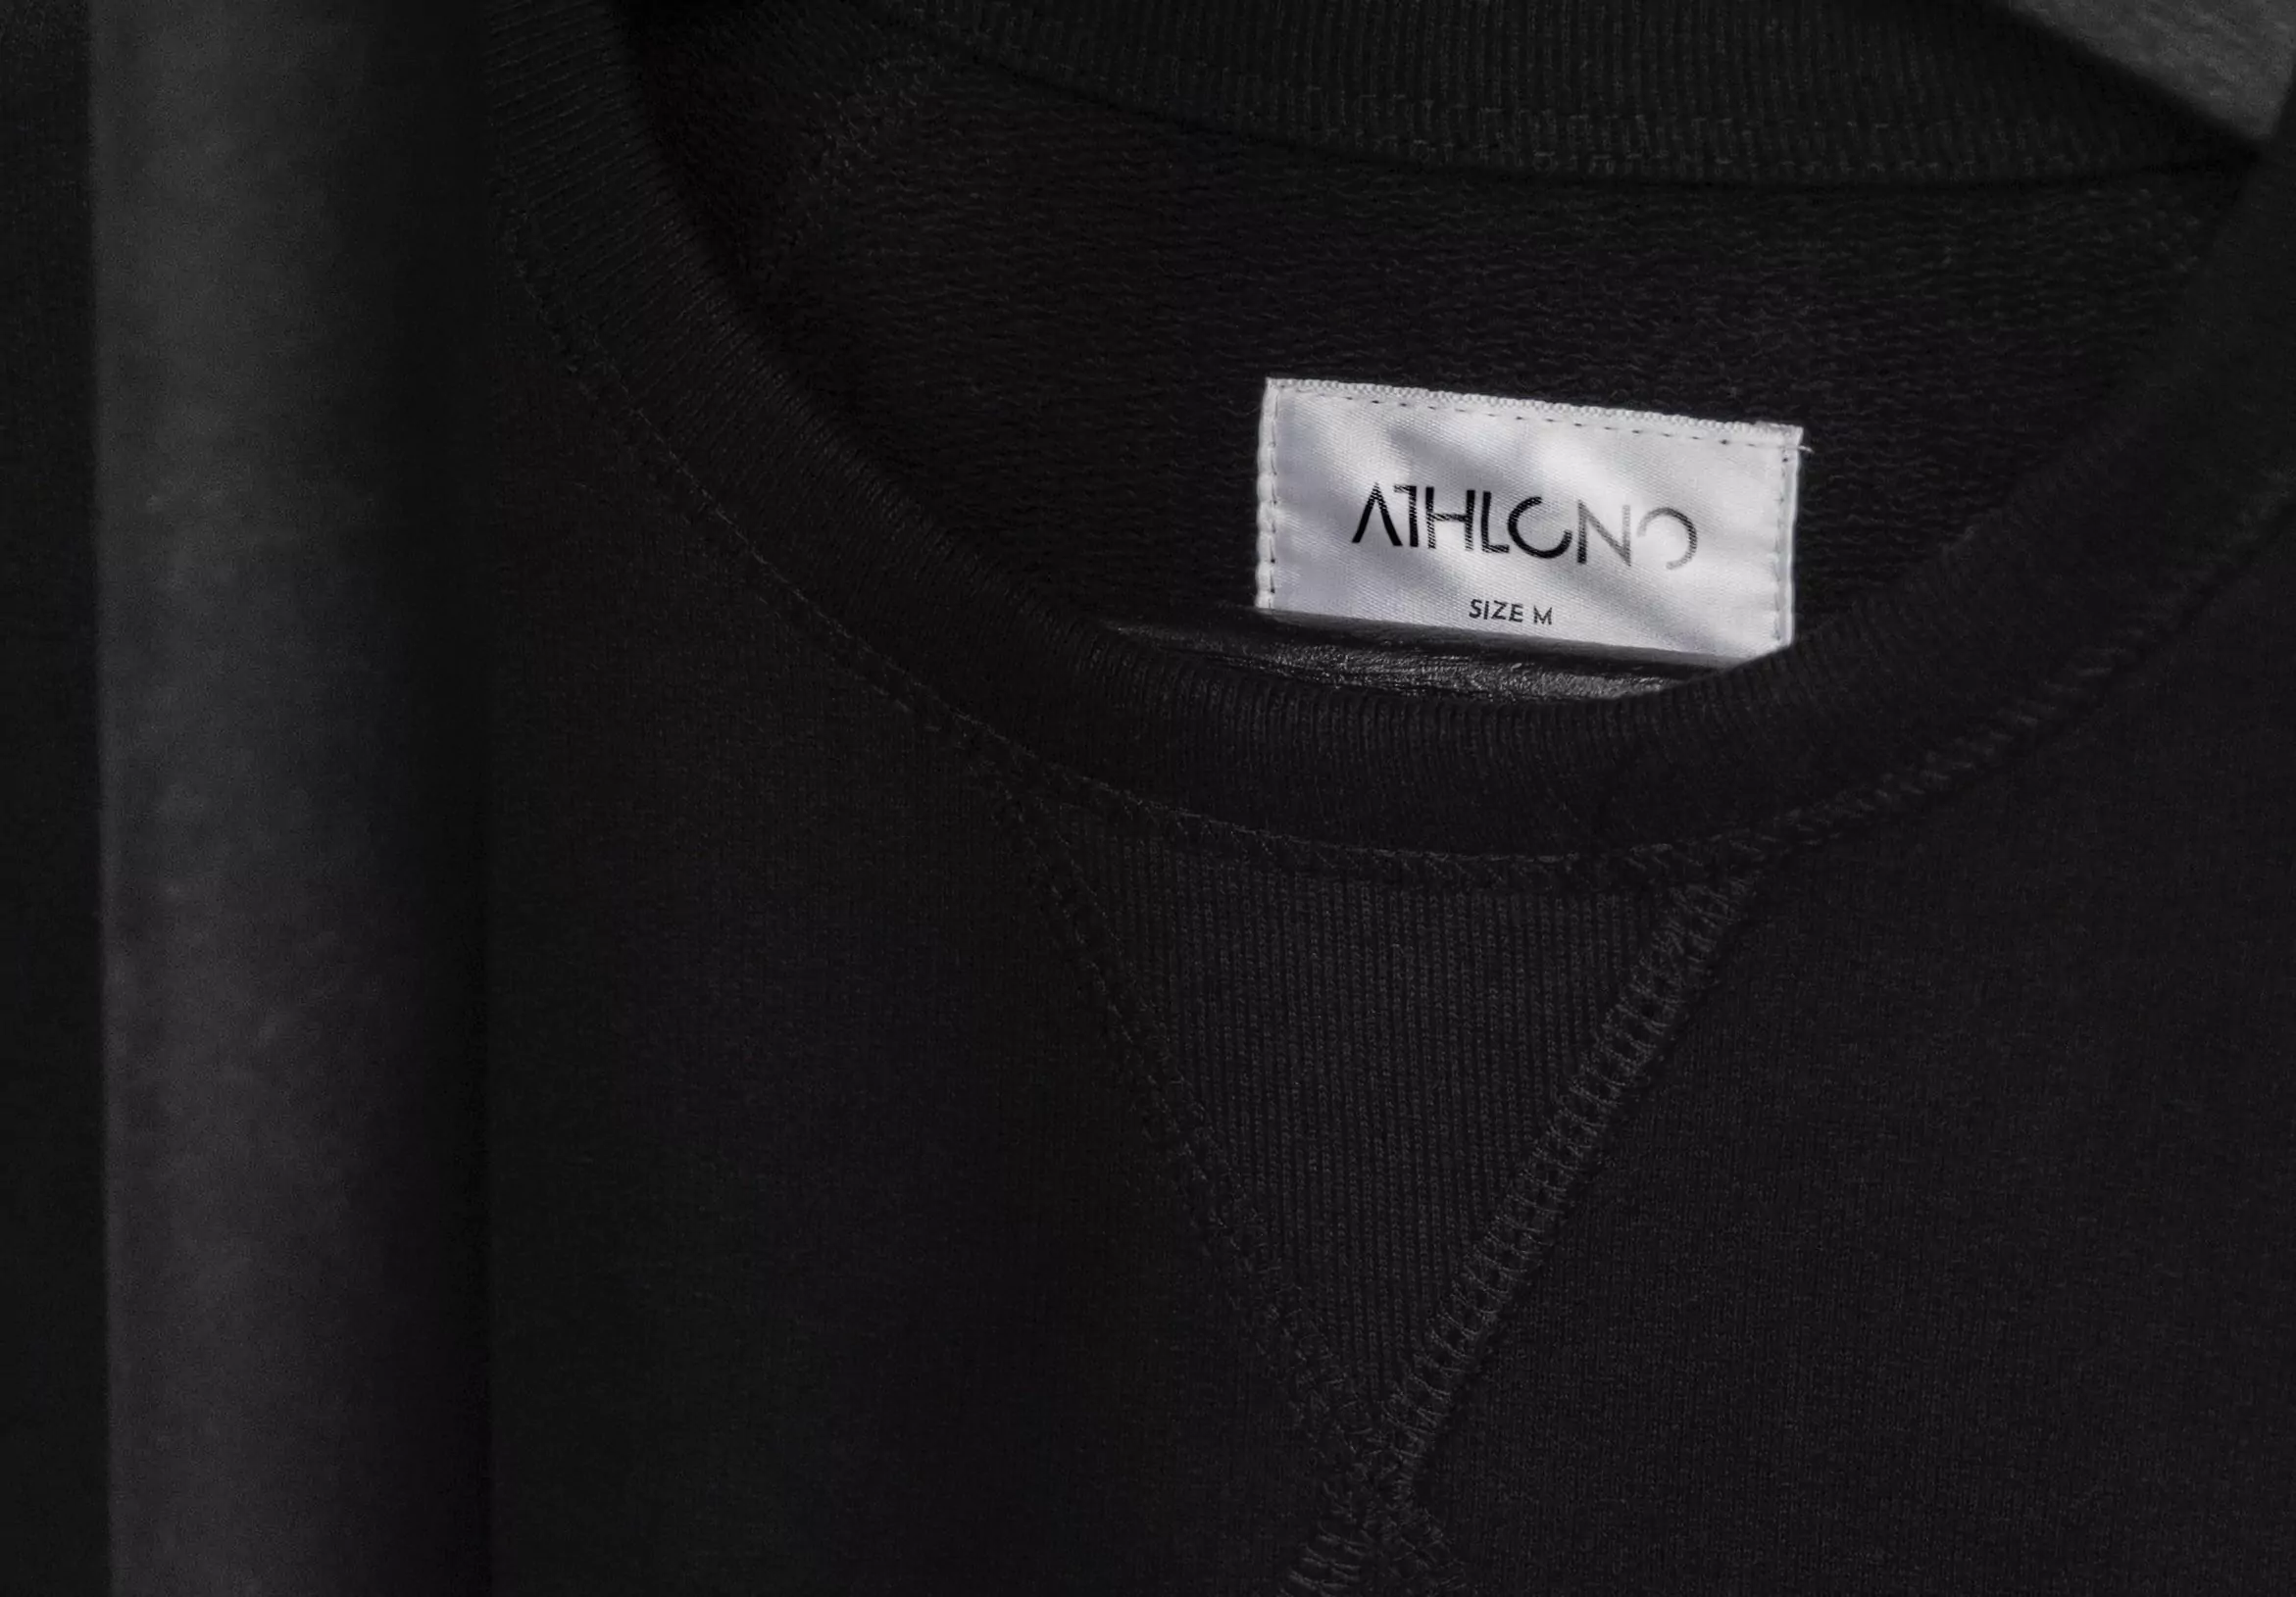 Athlono Brand Identity - Tag Label Design